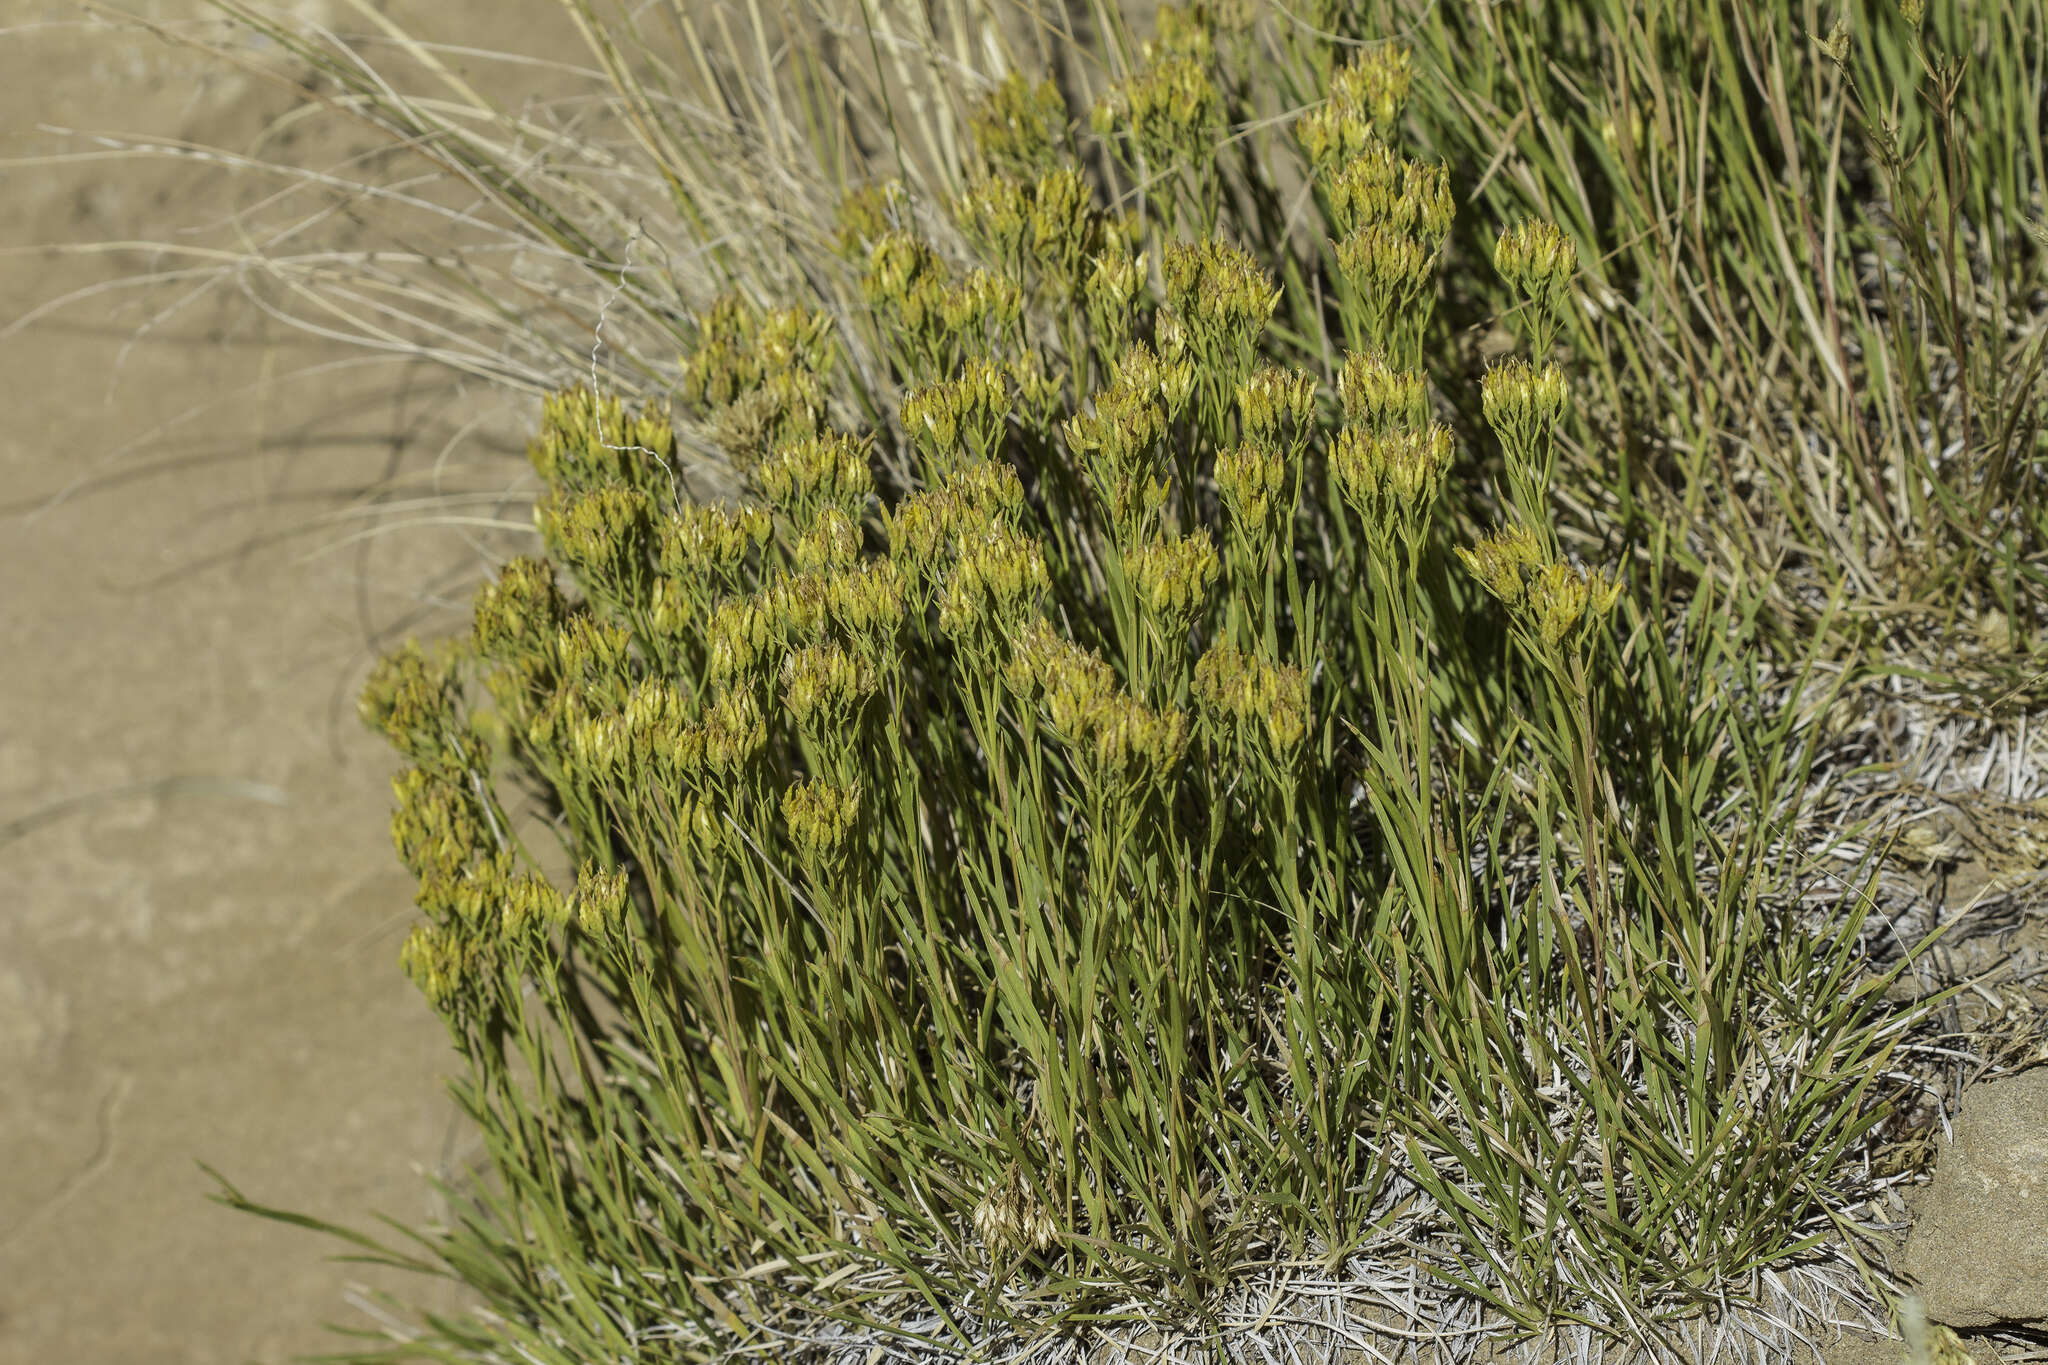 Image of grass-leaved rock goldenrod